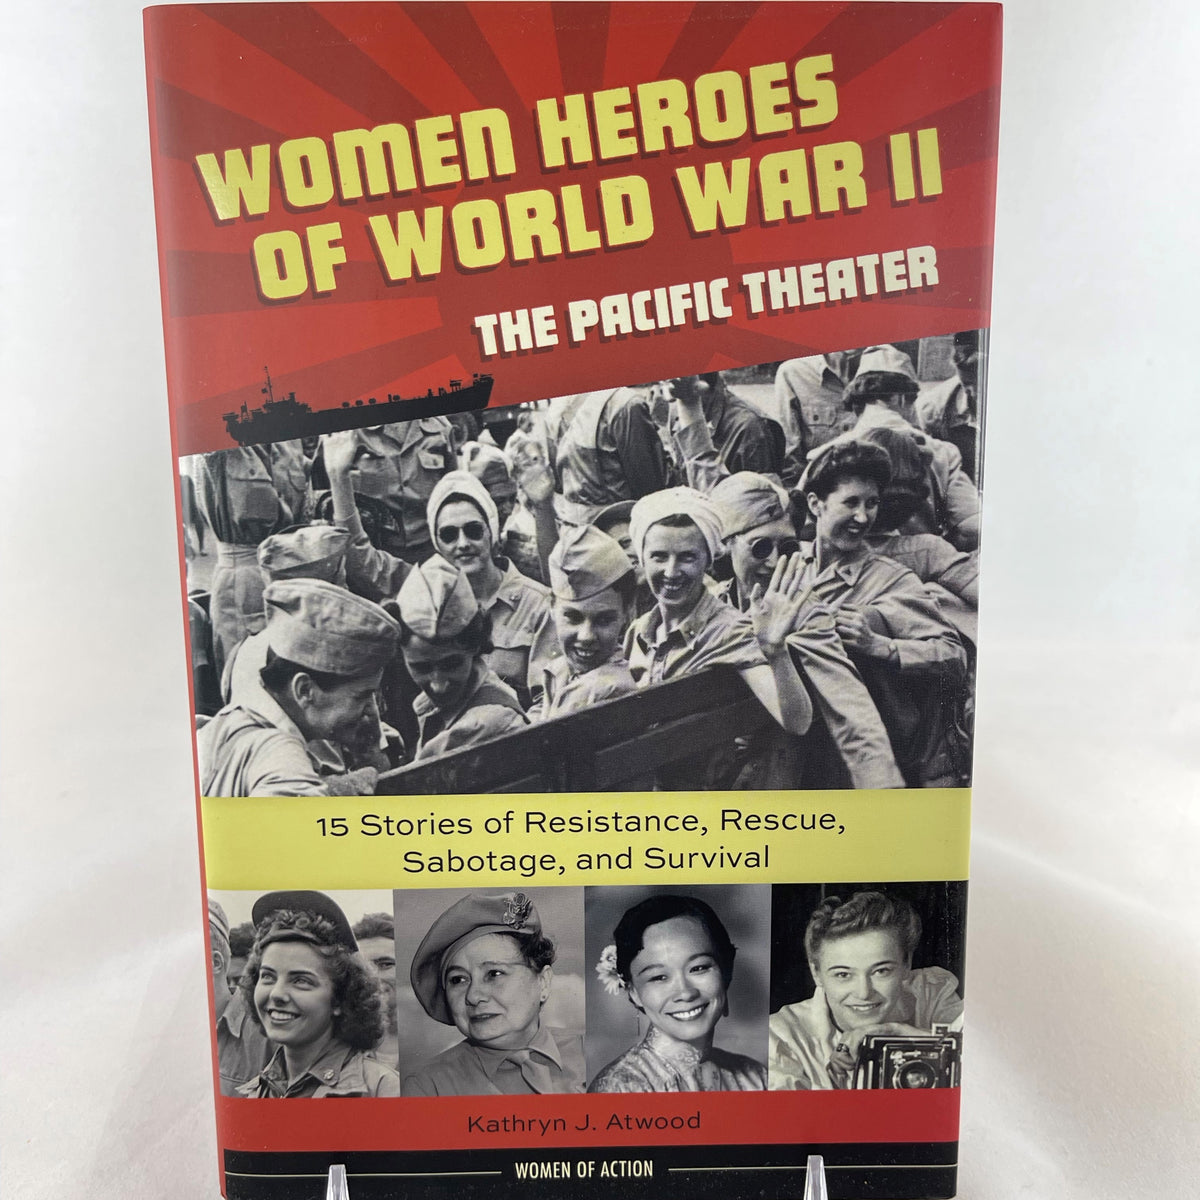 Women Heroes of World War II - The Pacific Theater